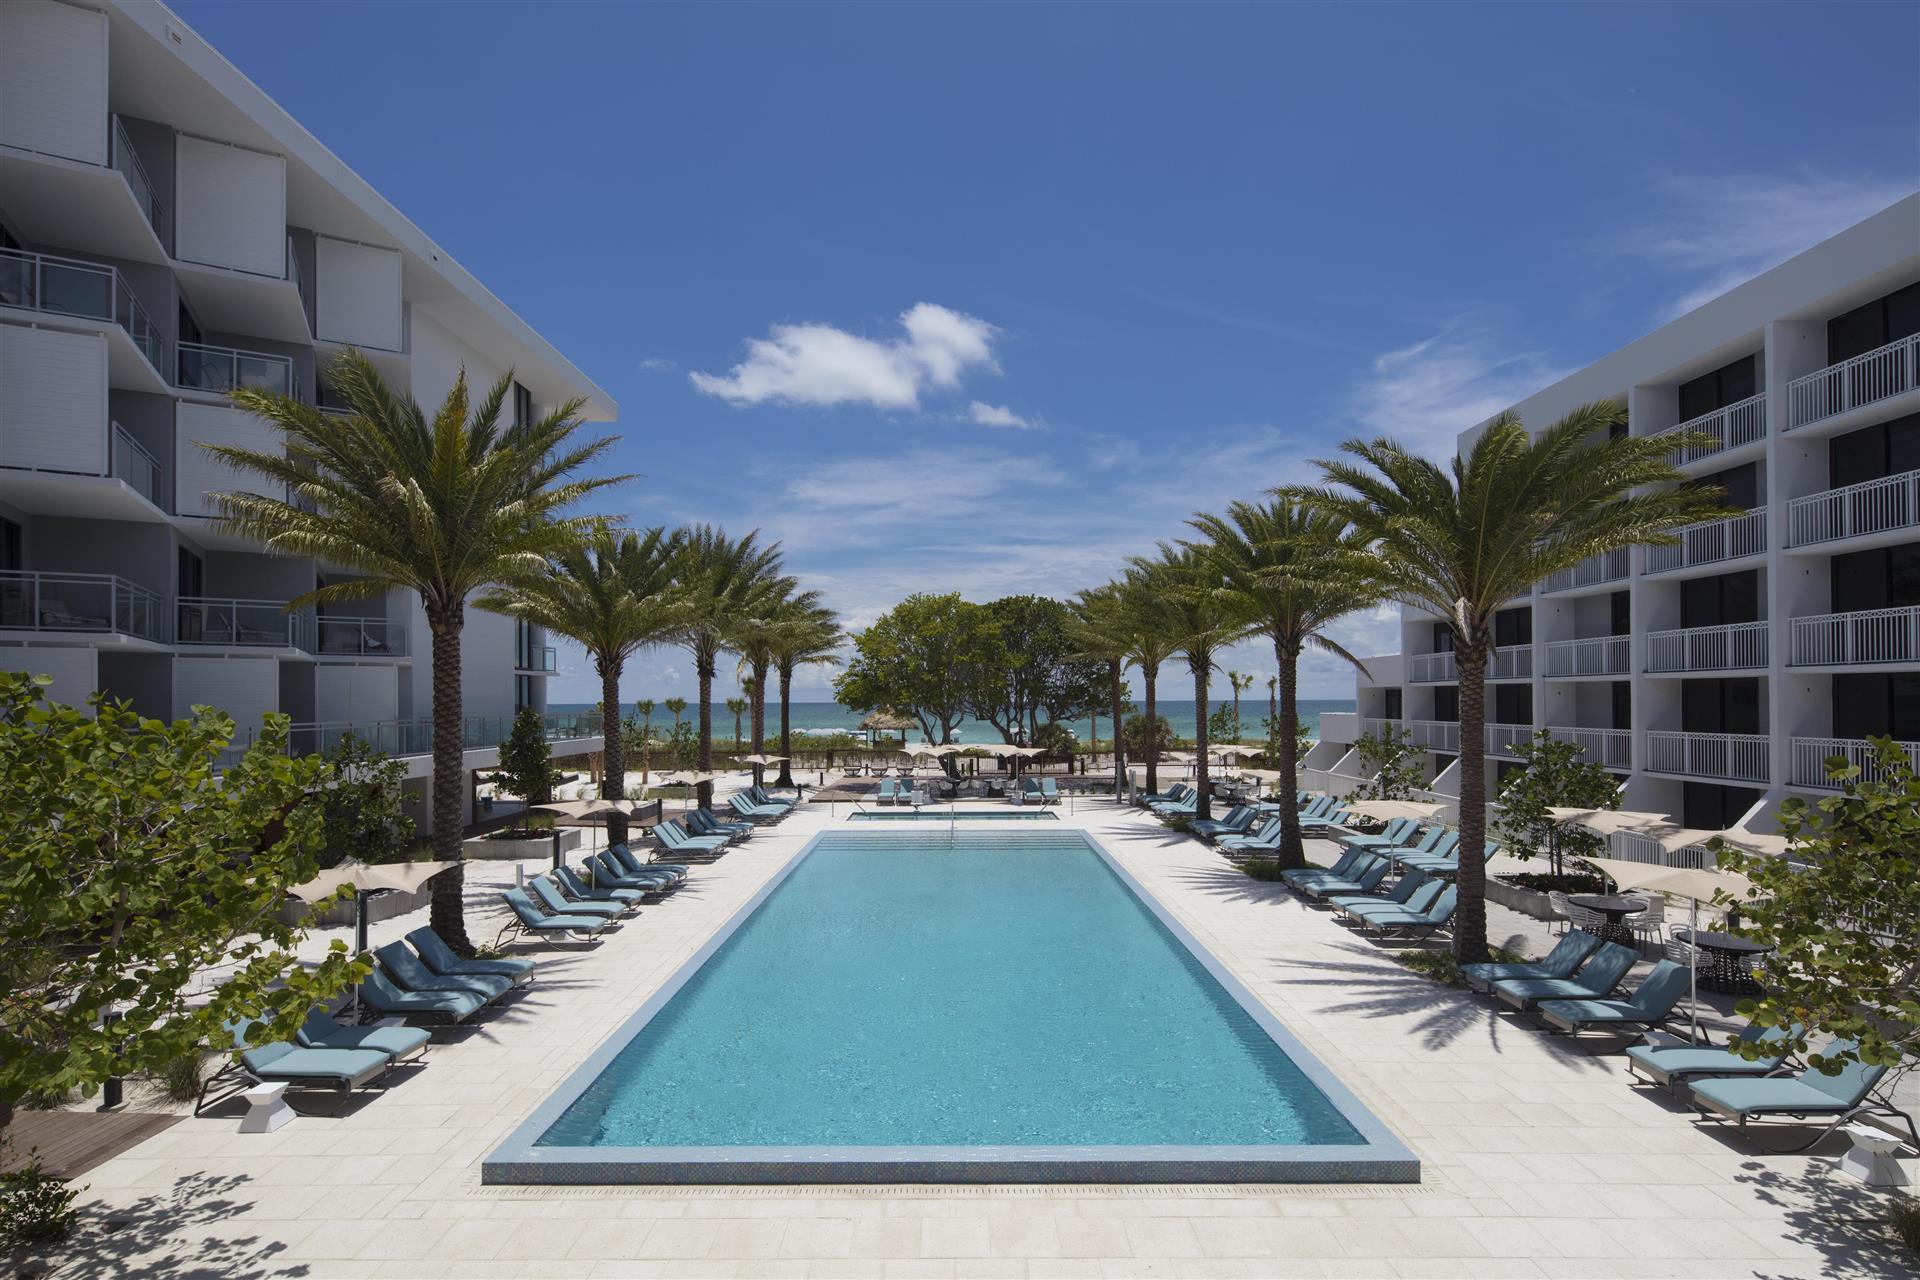 Zota Beach Resort in Longboat Key, FL